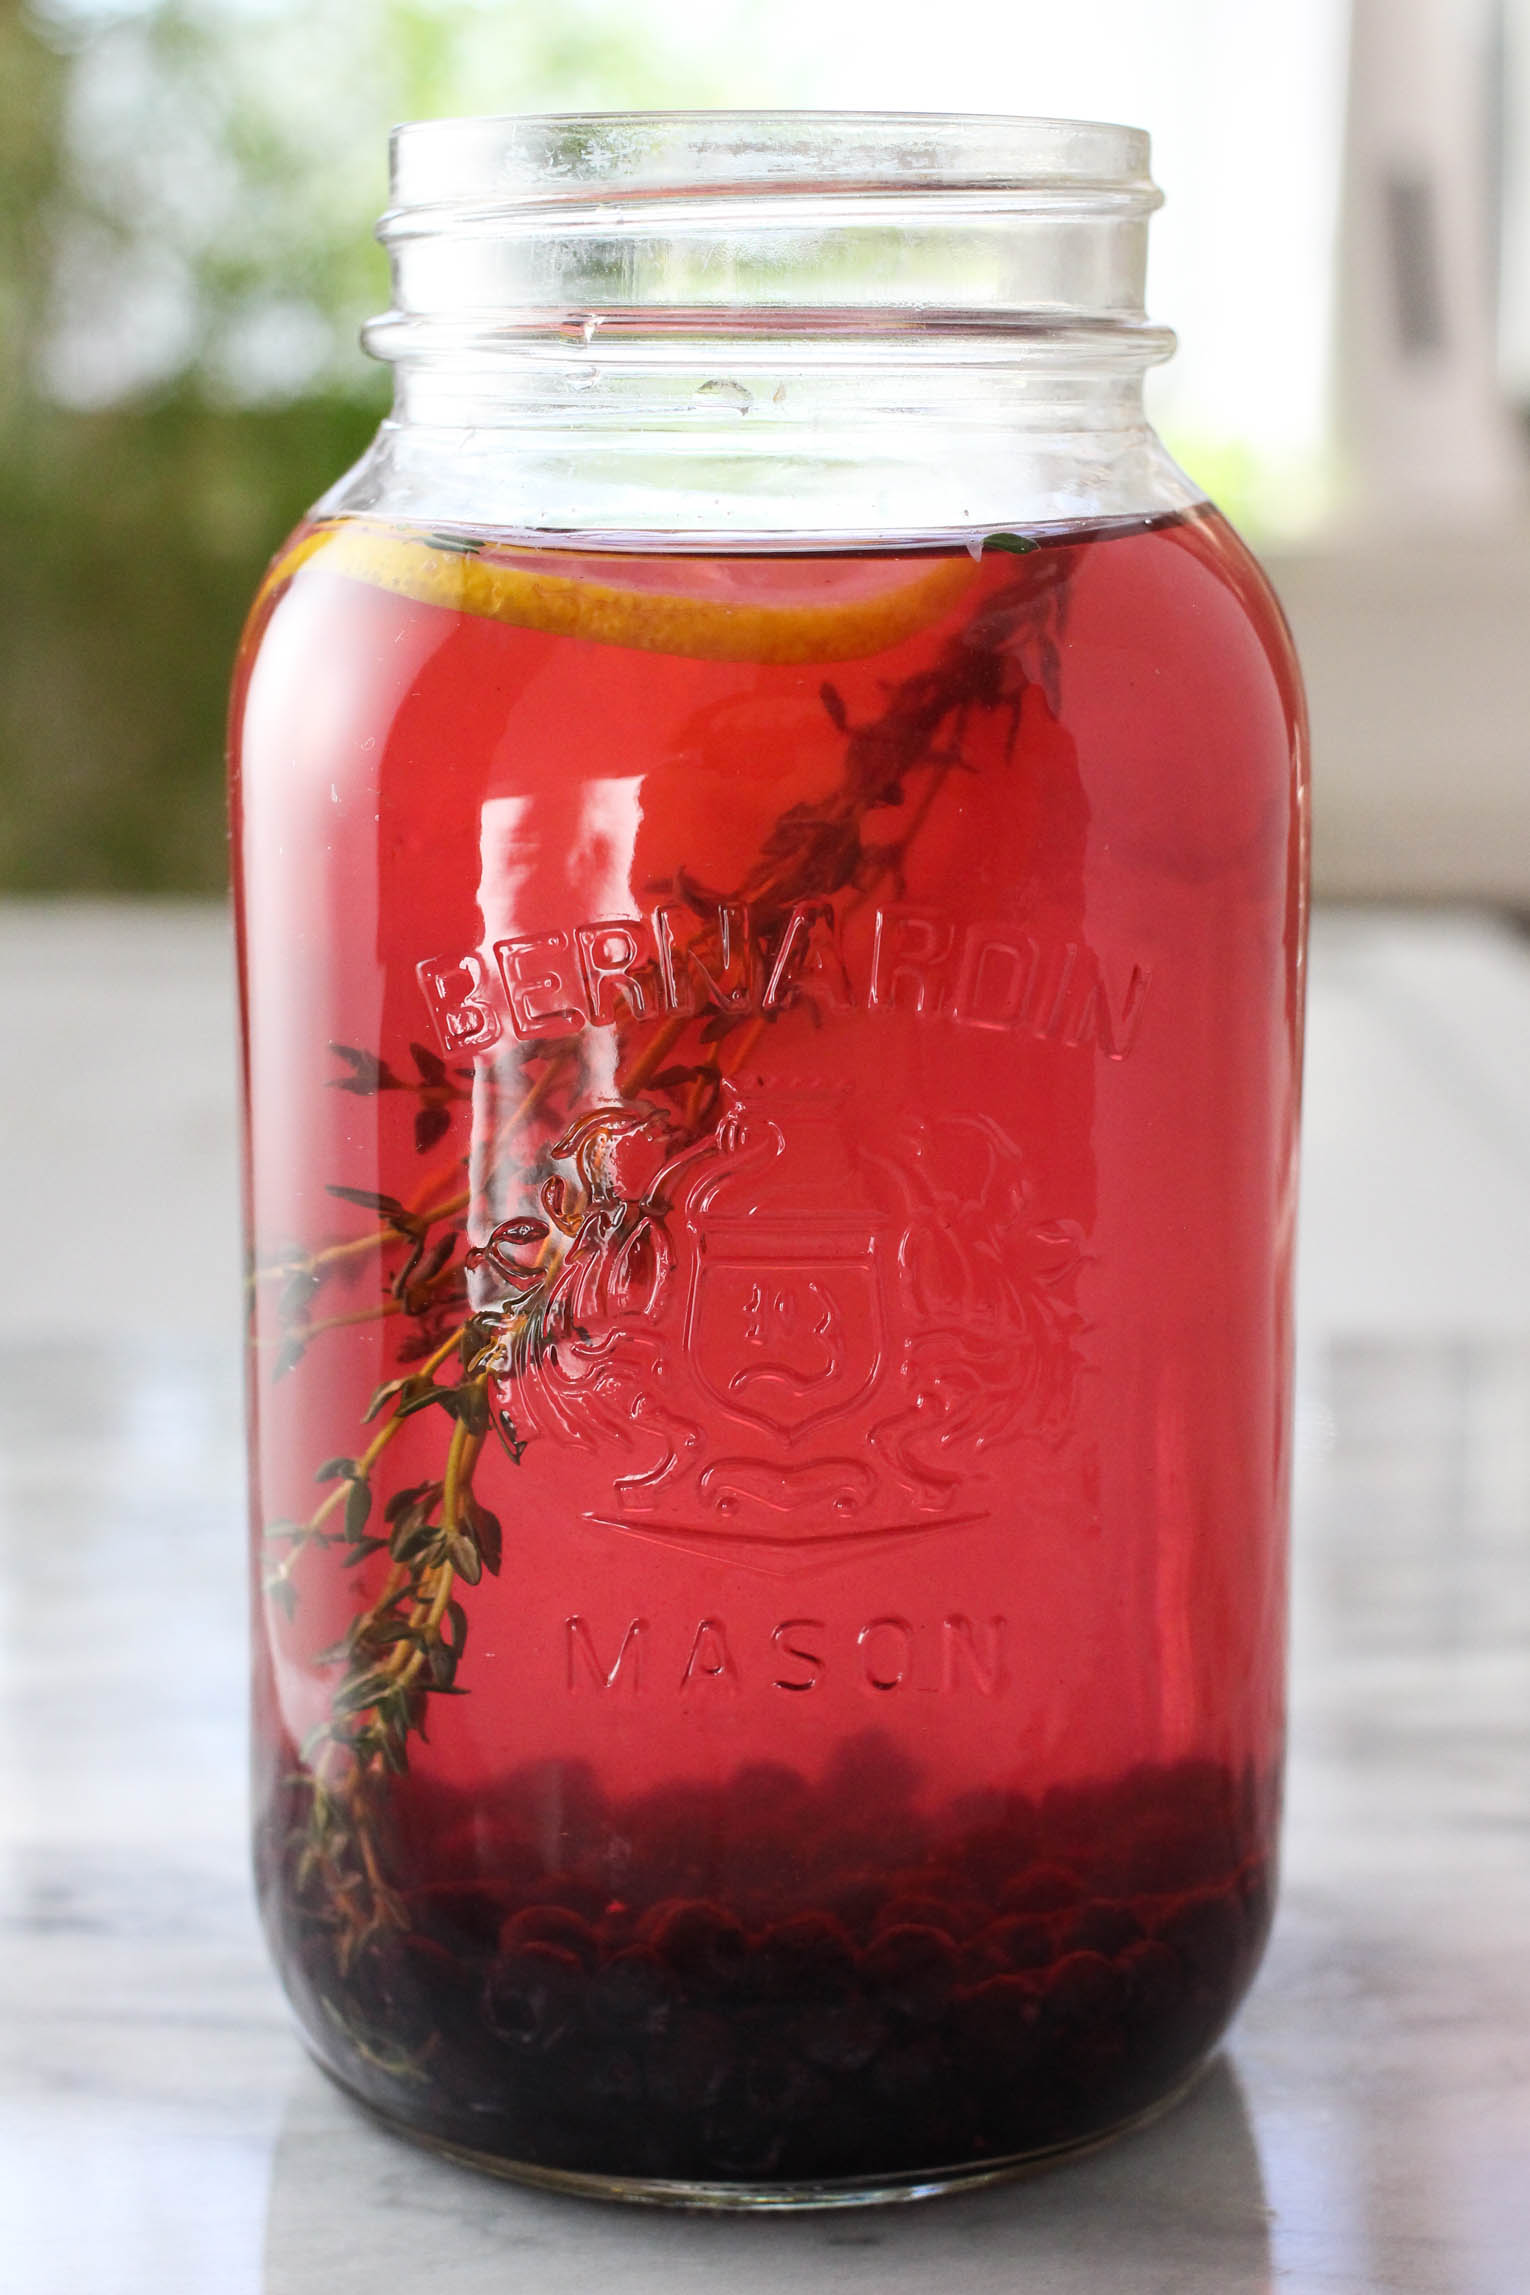 Blueberry water in a Mason jar.